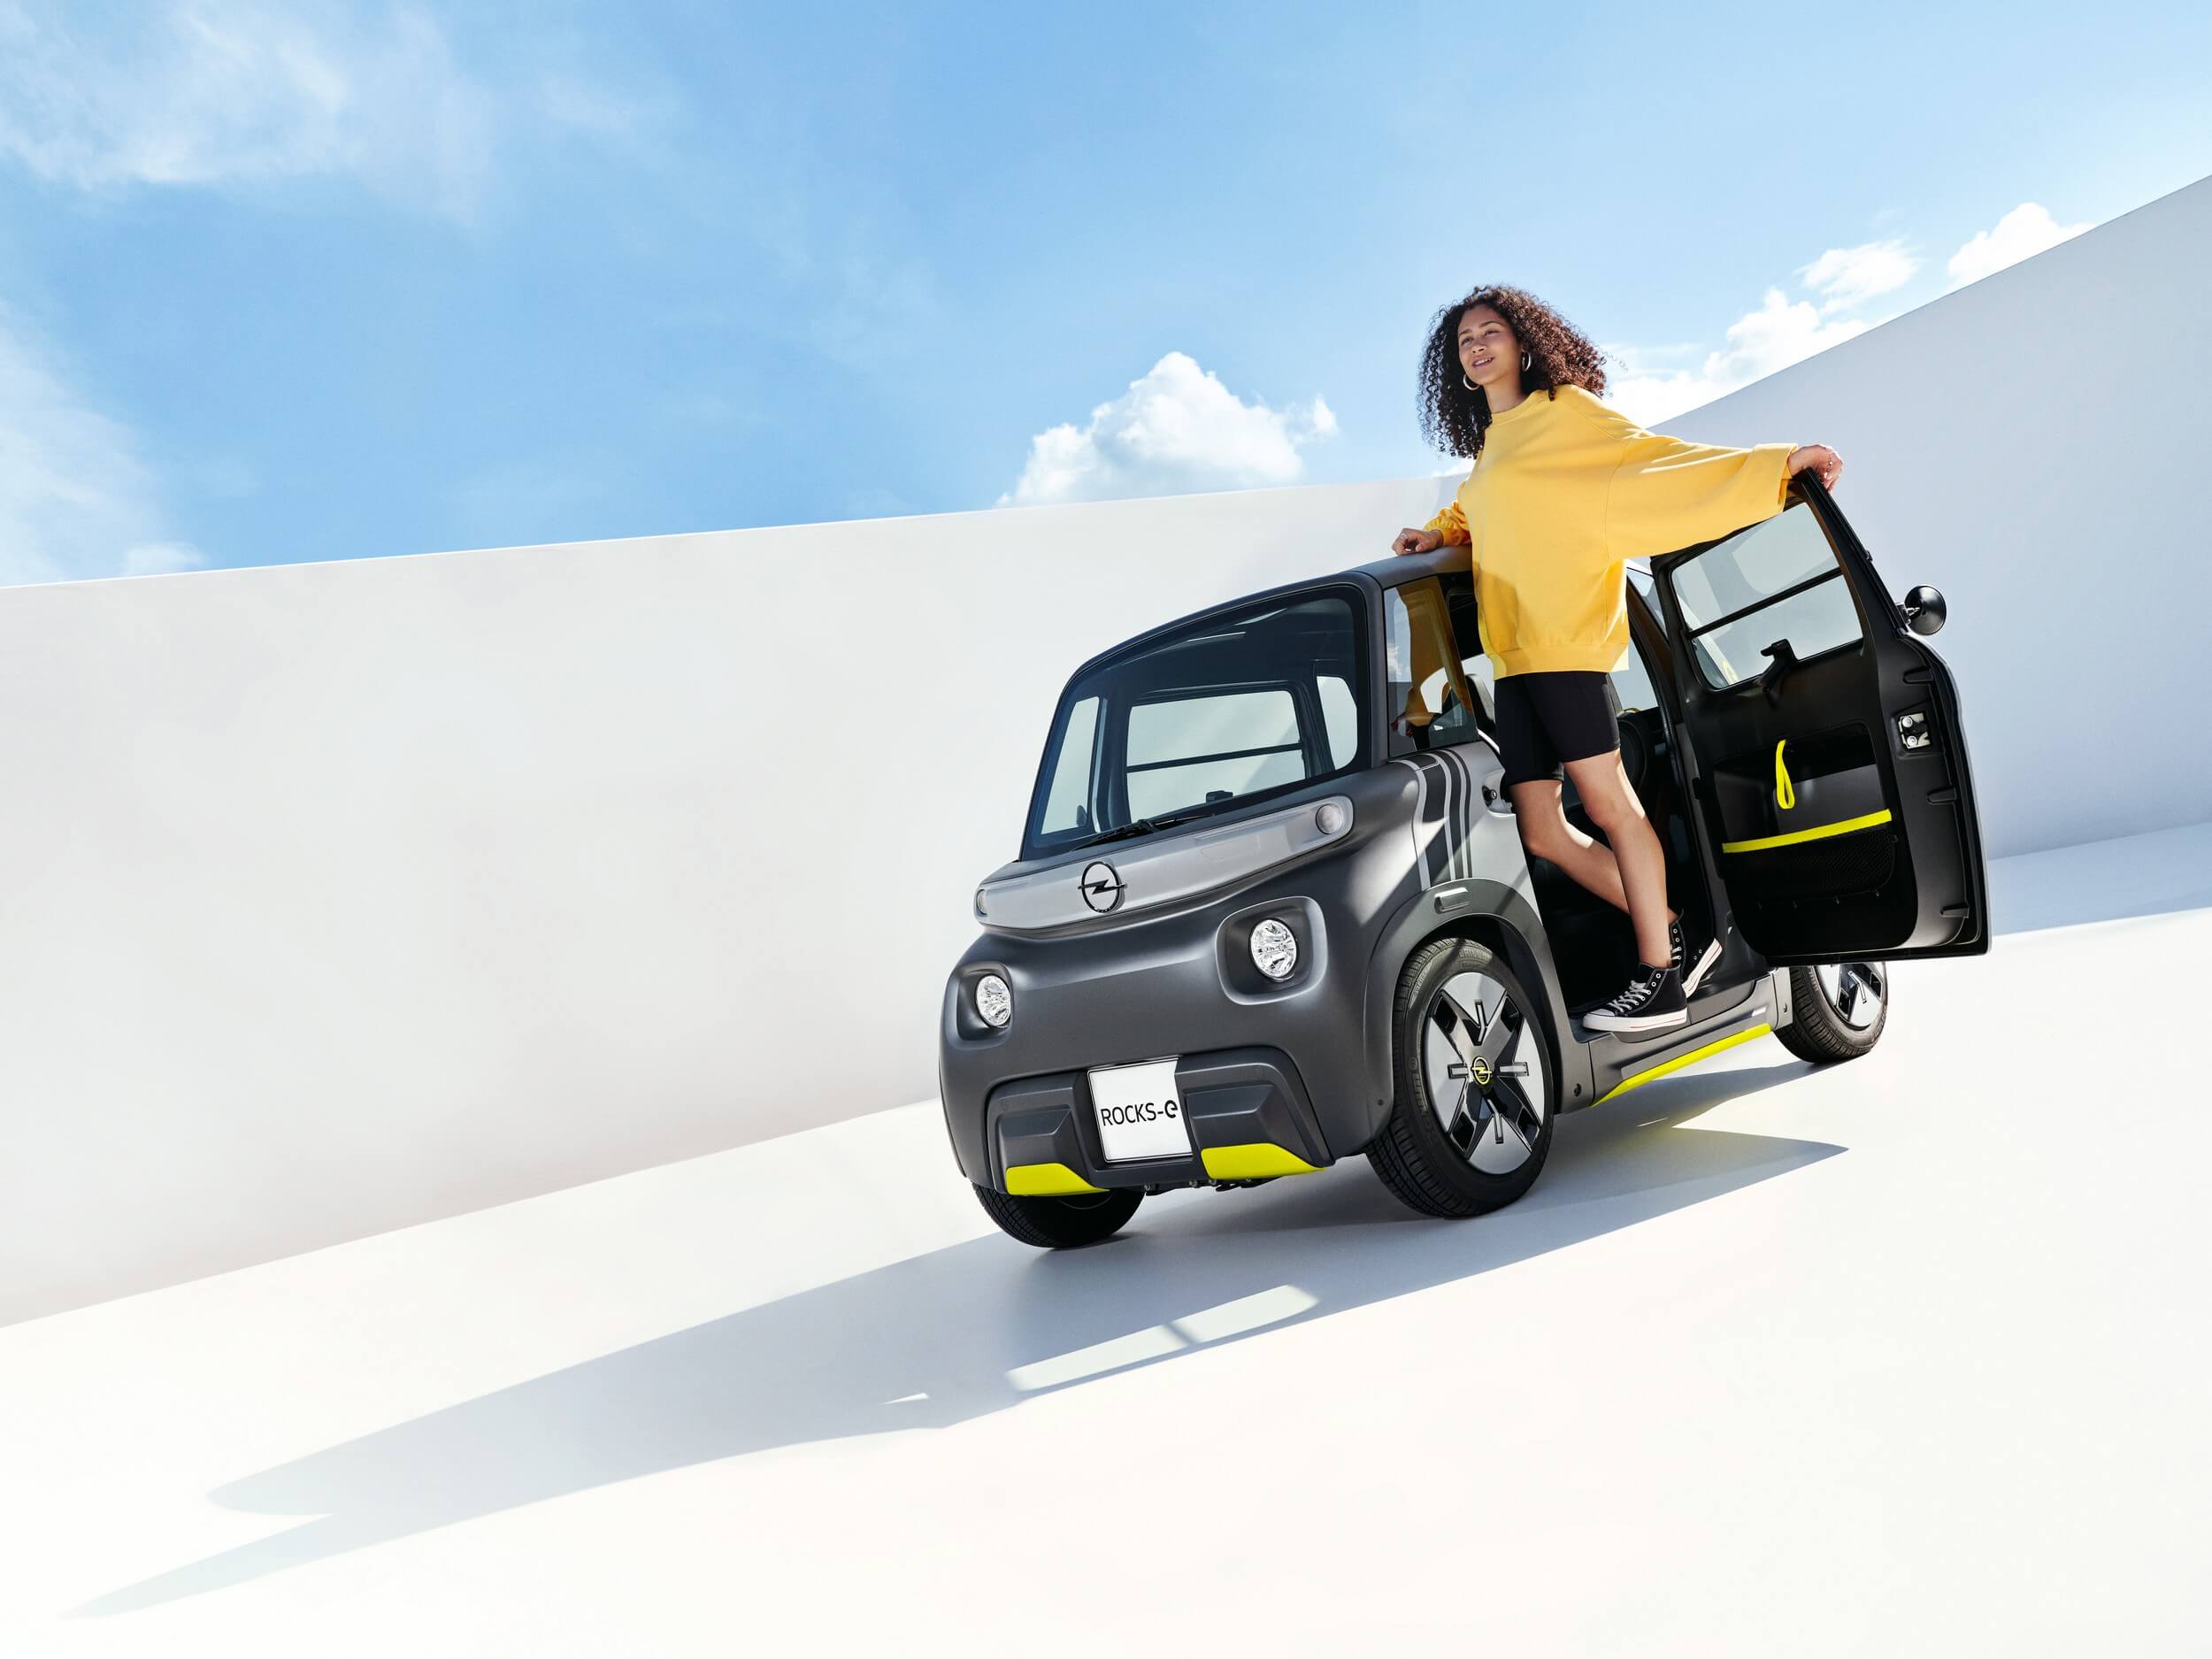 Opel'den şehir içi ulaşıma elektrikli çözüm: Opel Rocks-e